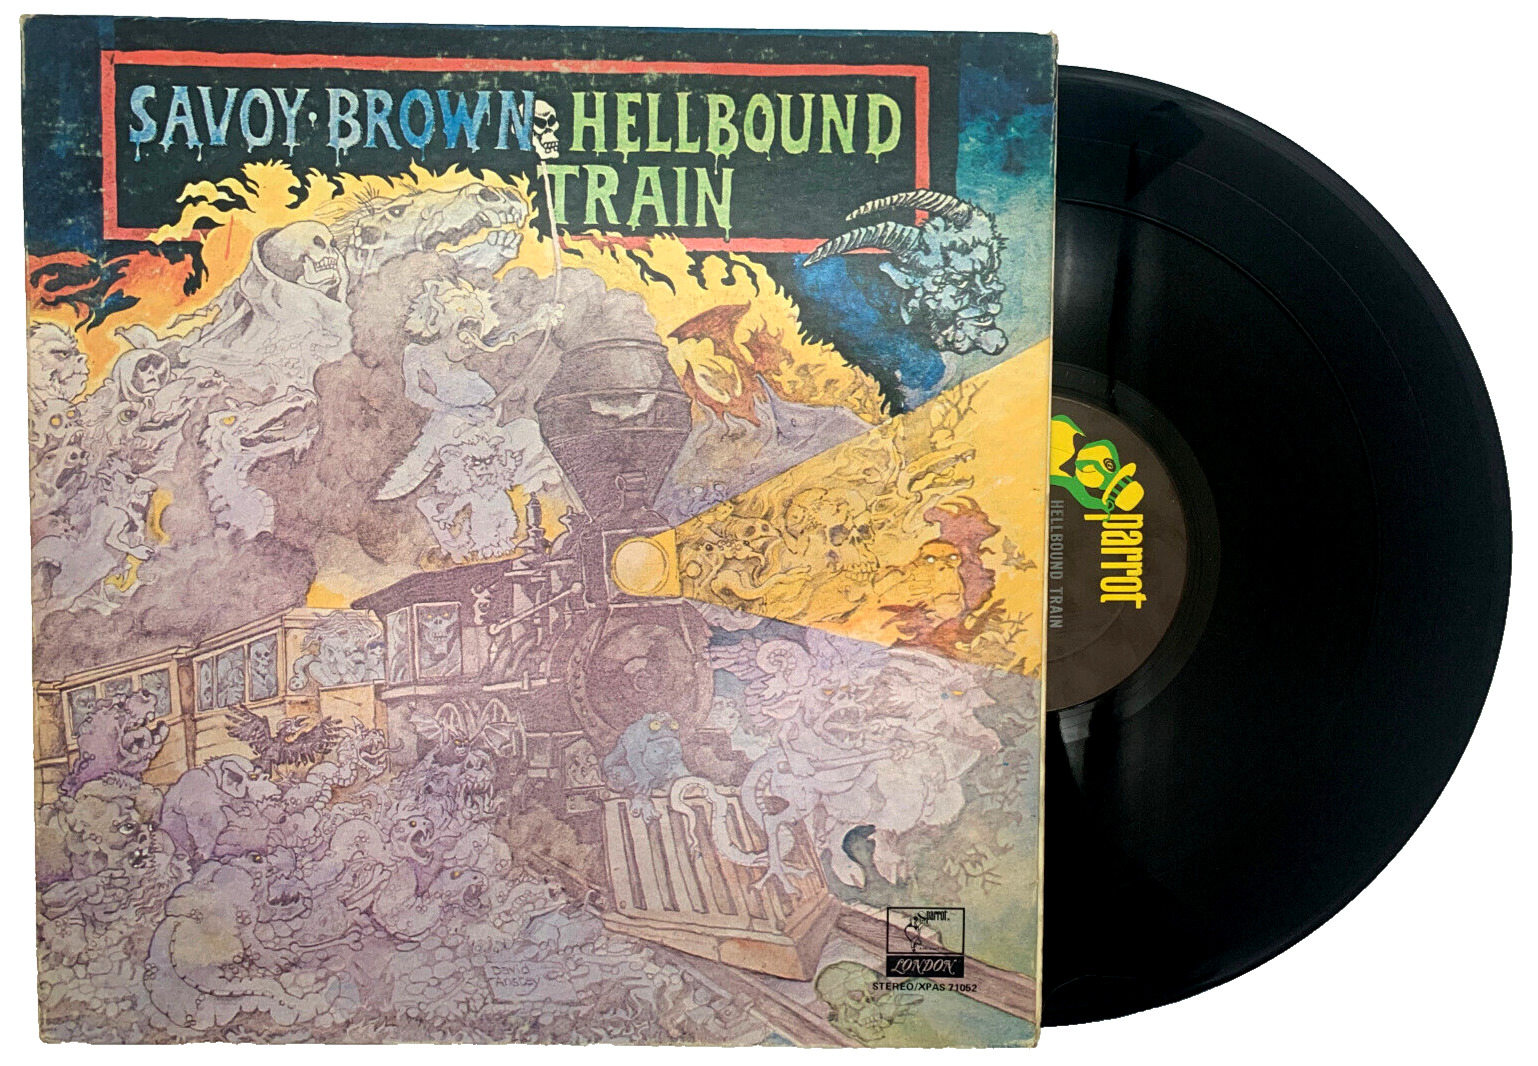 SAVOY BROWN - HELLBOUND TRAIN VINYL LP RECORD 1972 PARROT XPAS 71052